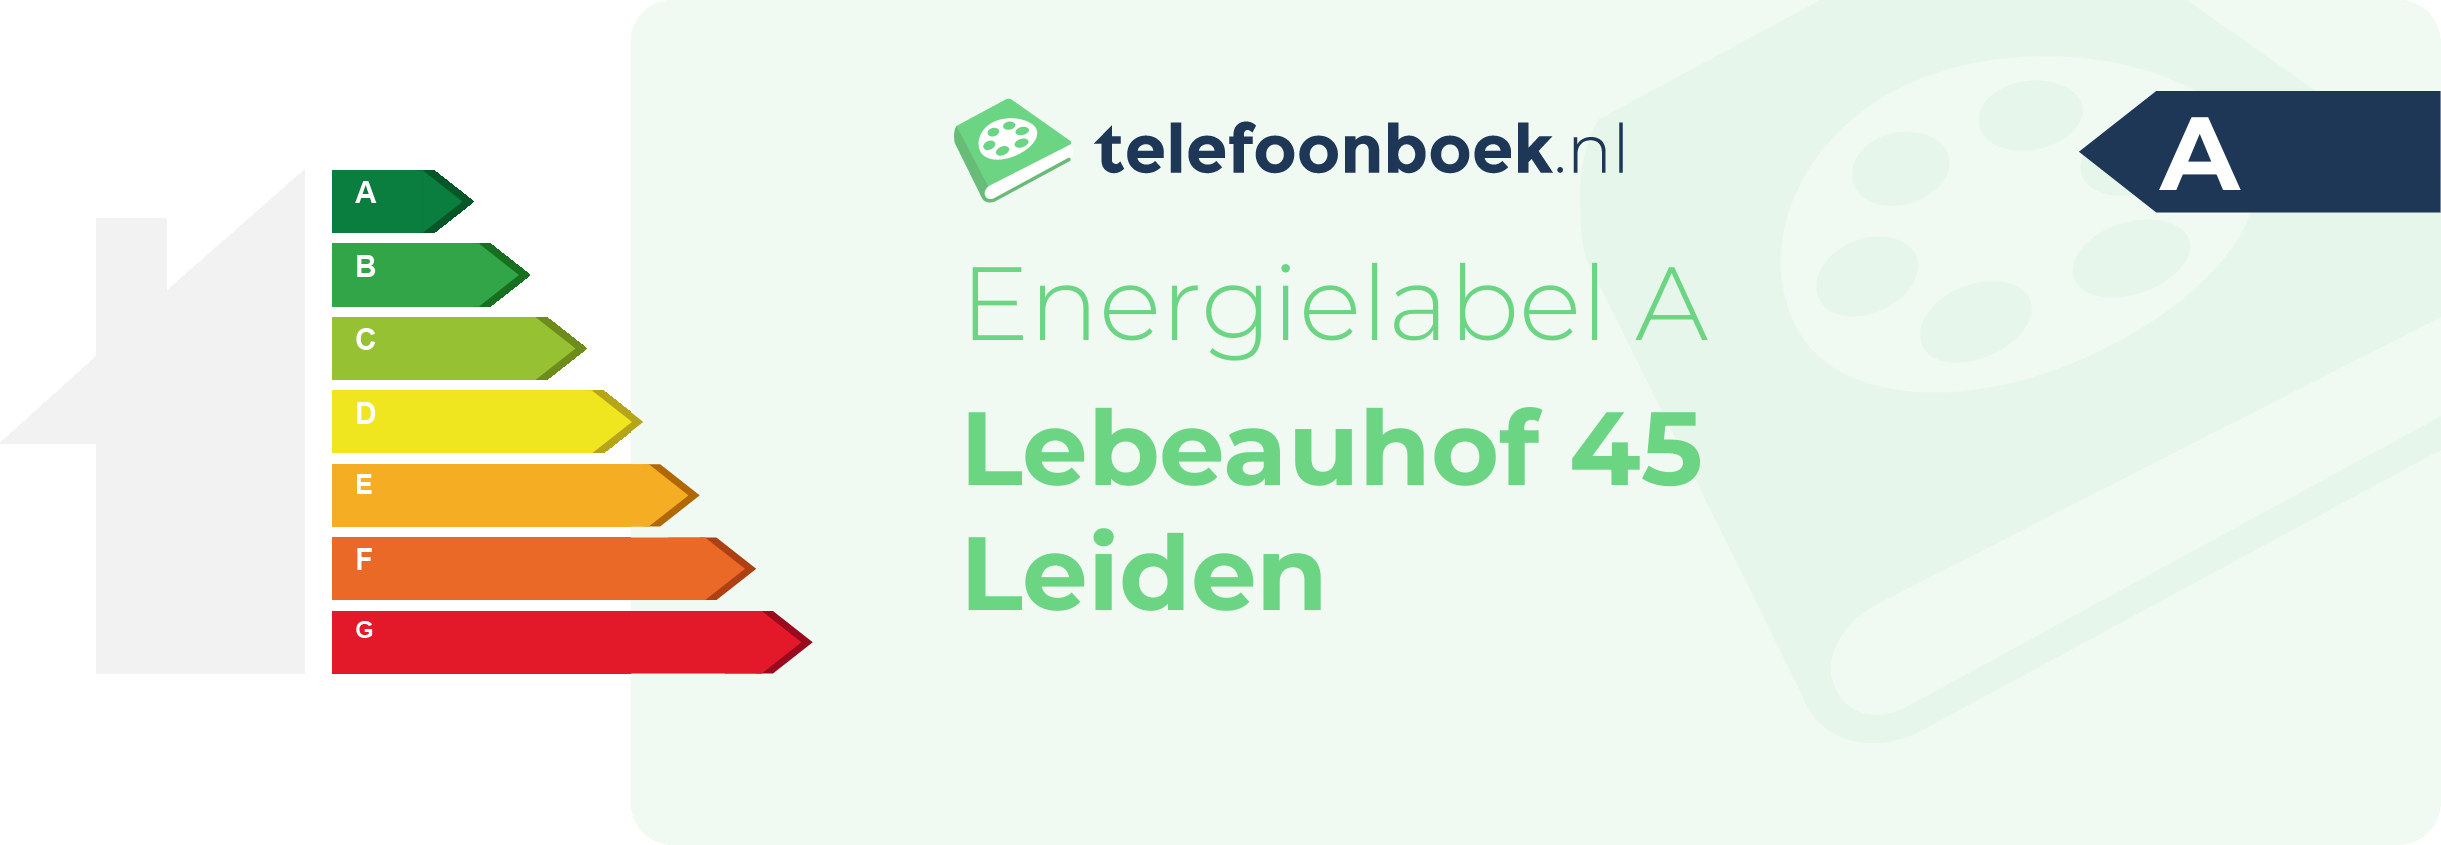 Energielabel Lebeauhof 45 Leiden